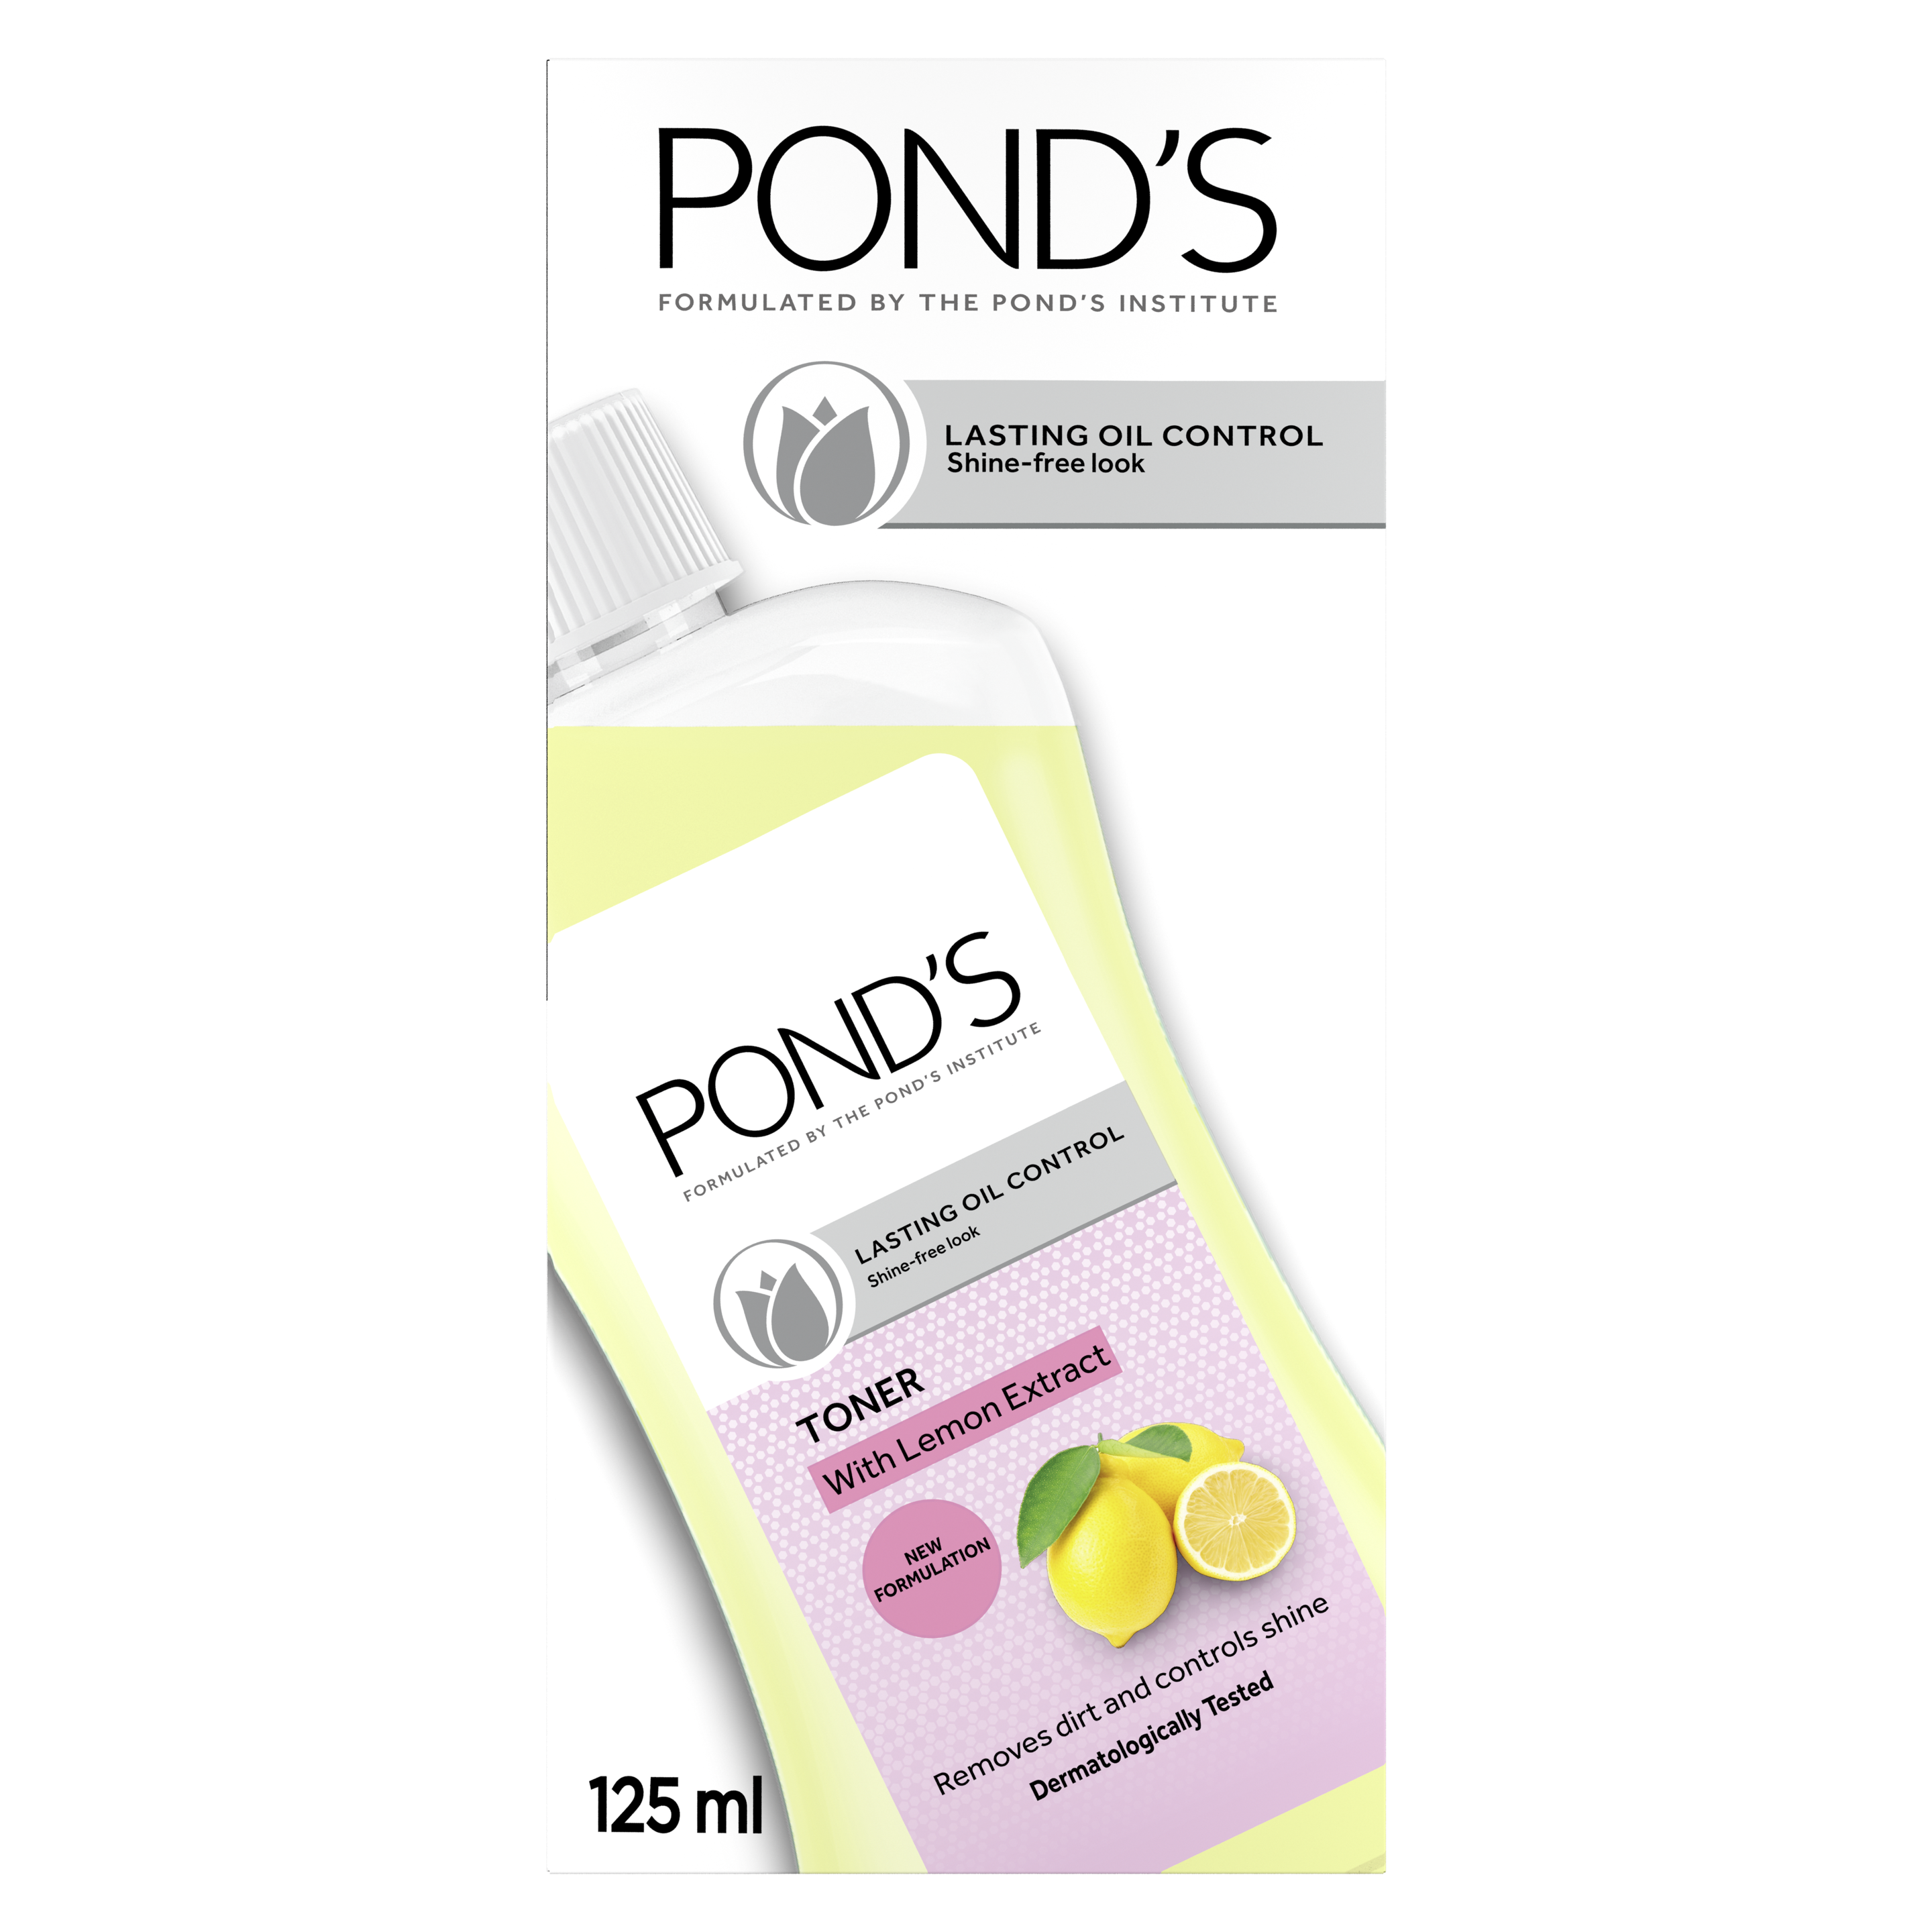 POND'S Lasting Oil Control Lemon Extract Facial Toner